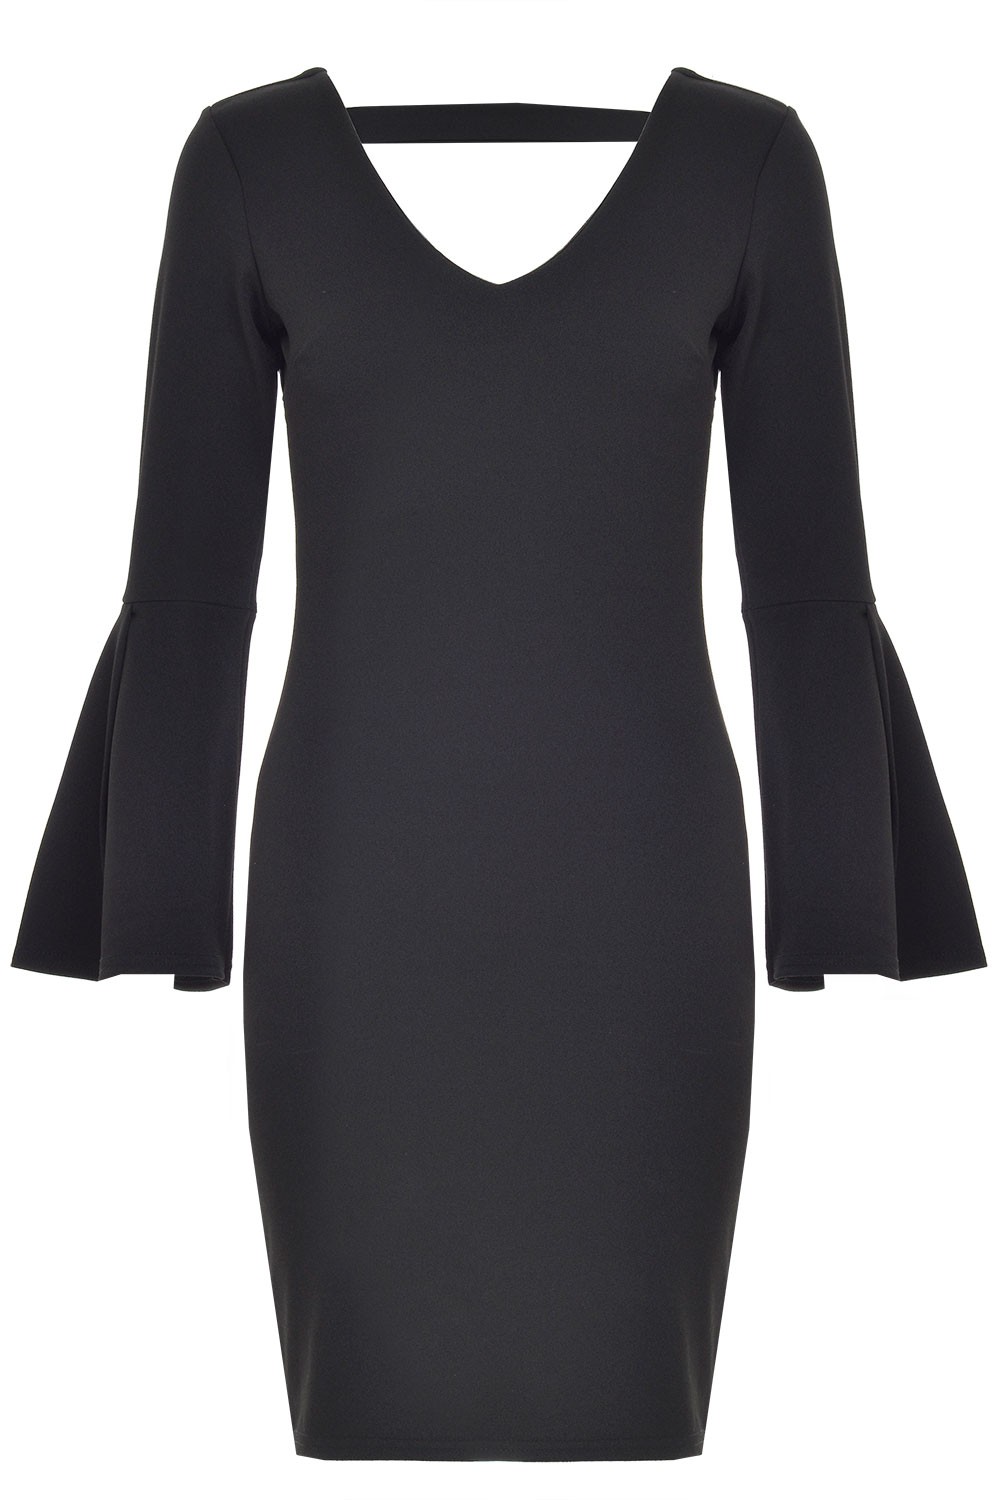 Premier De Toi Zara Bell Sleeve Bodycon Dress in Black | iCLOTHING